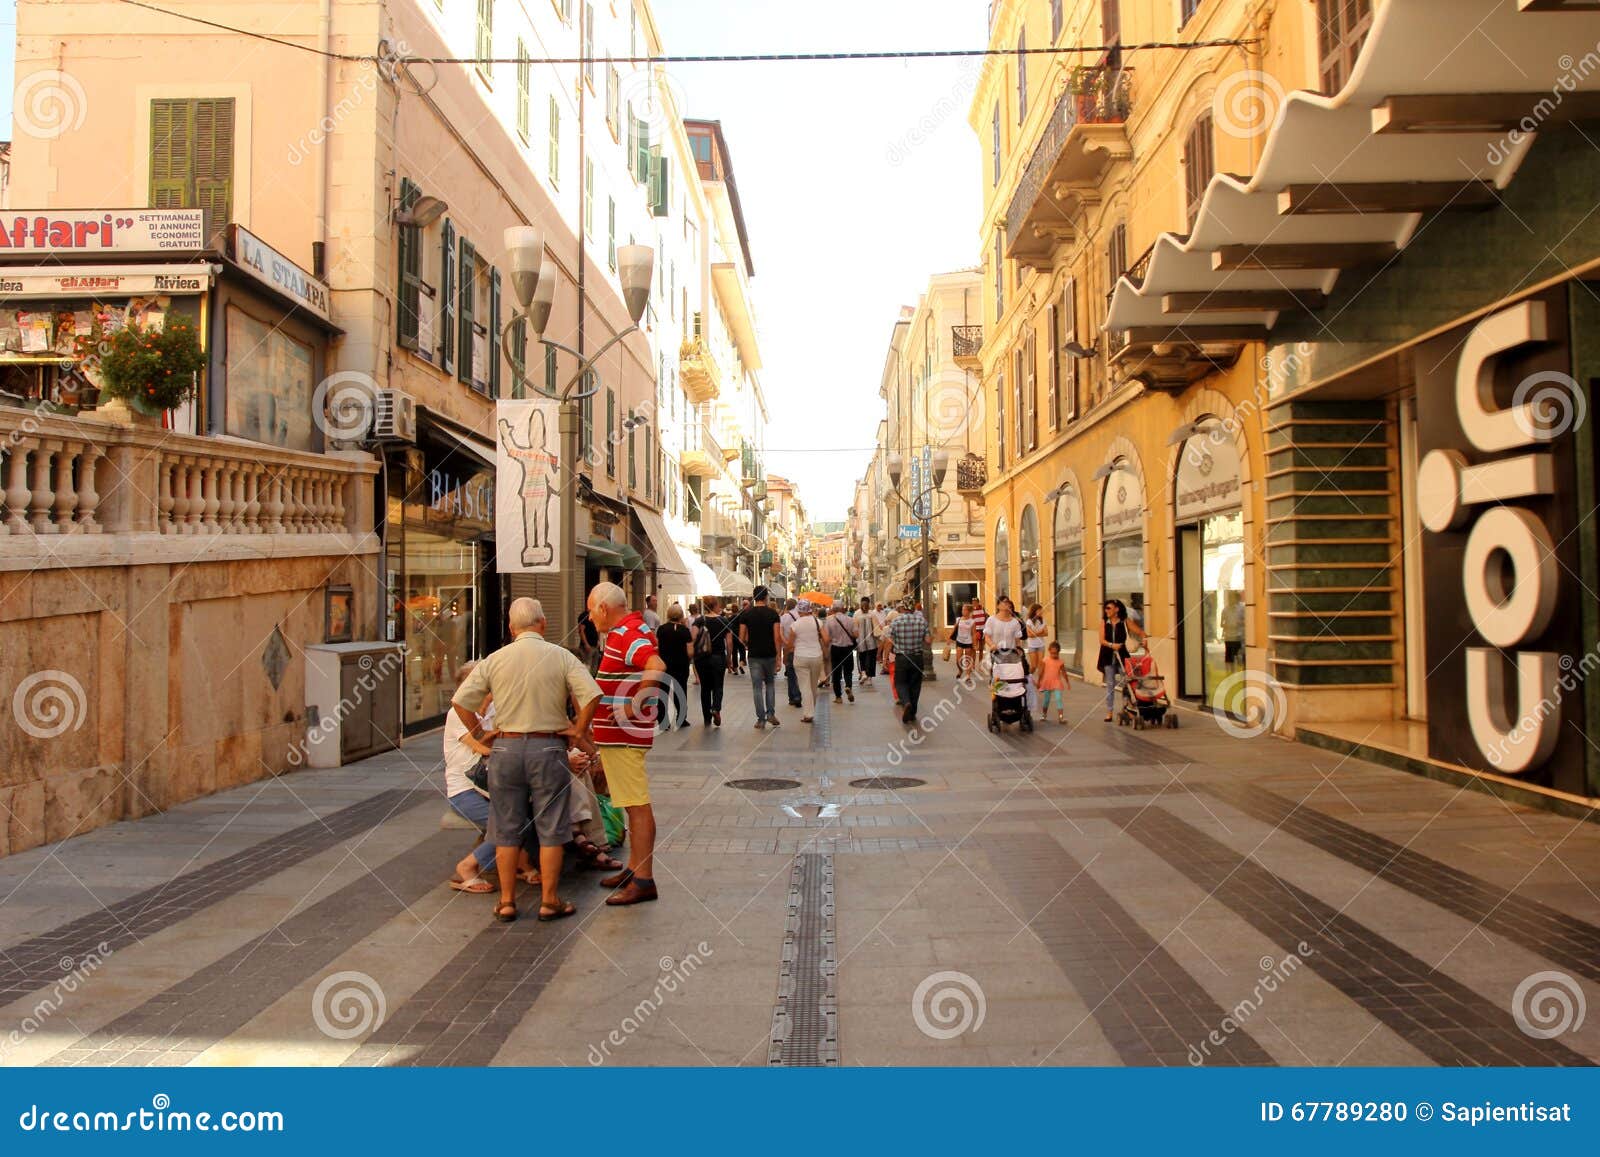 italian city of san remo zip